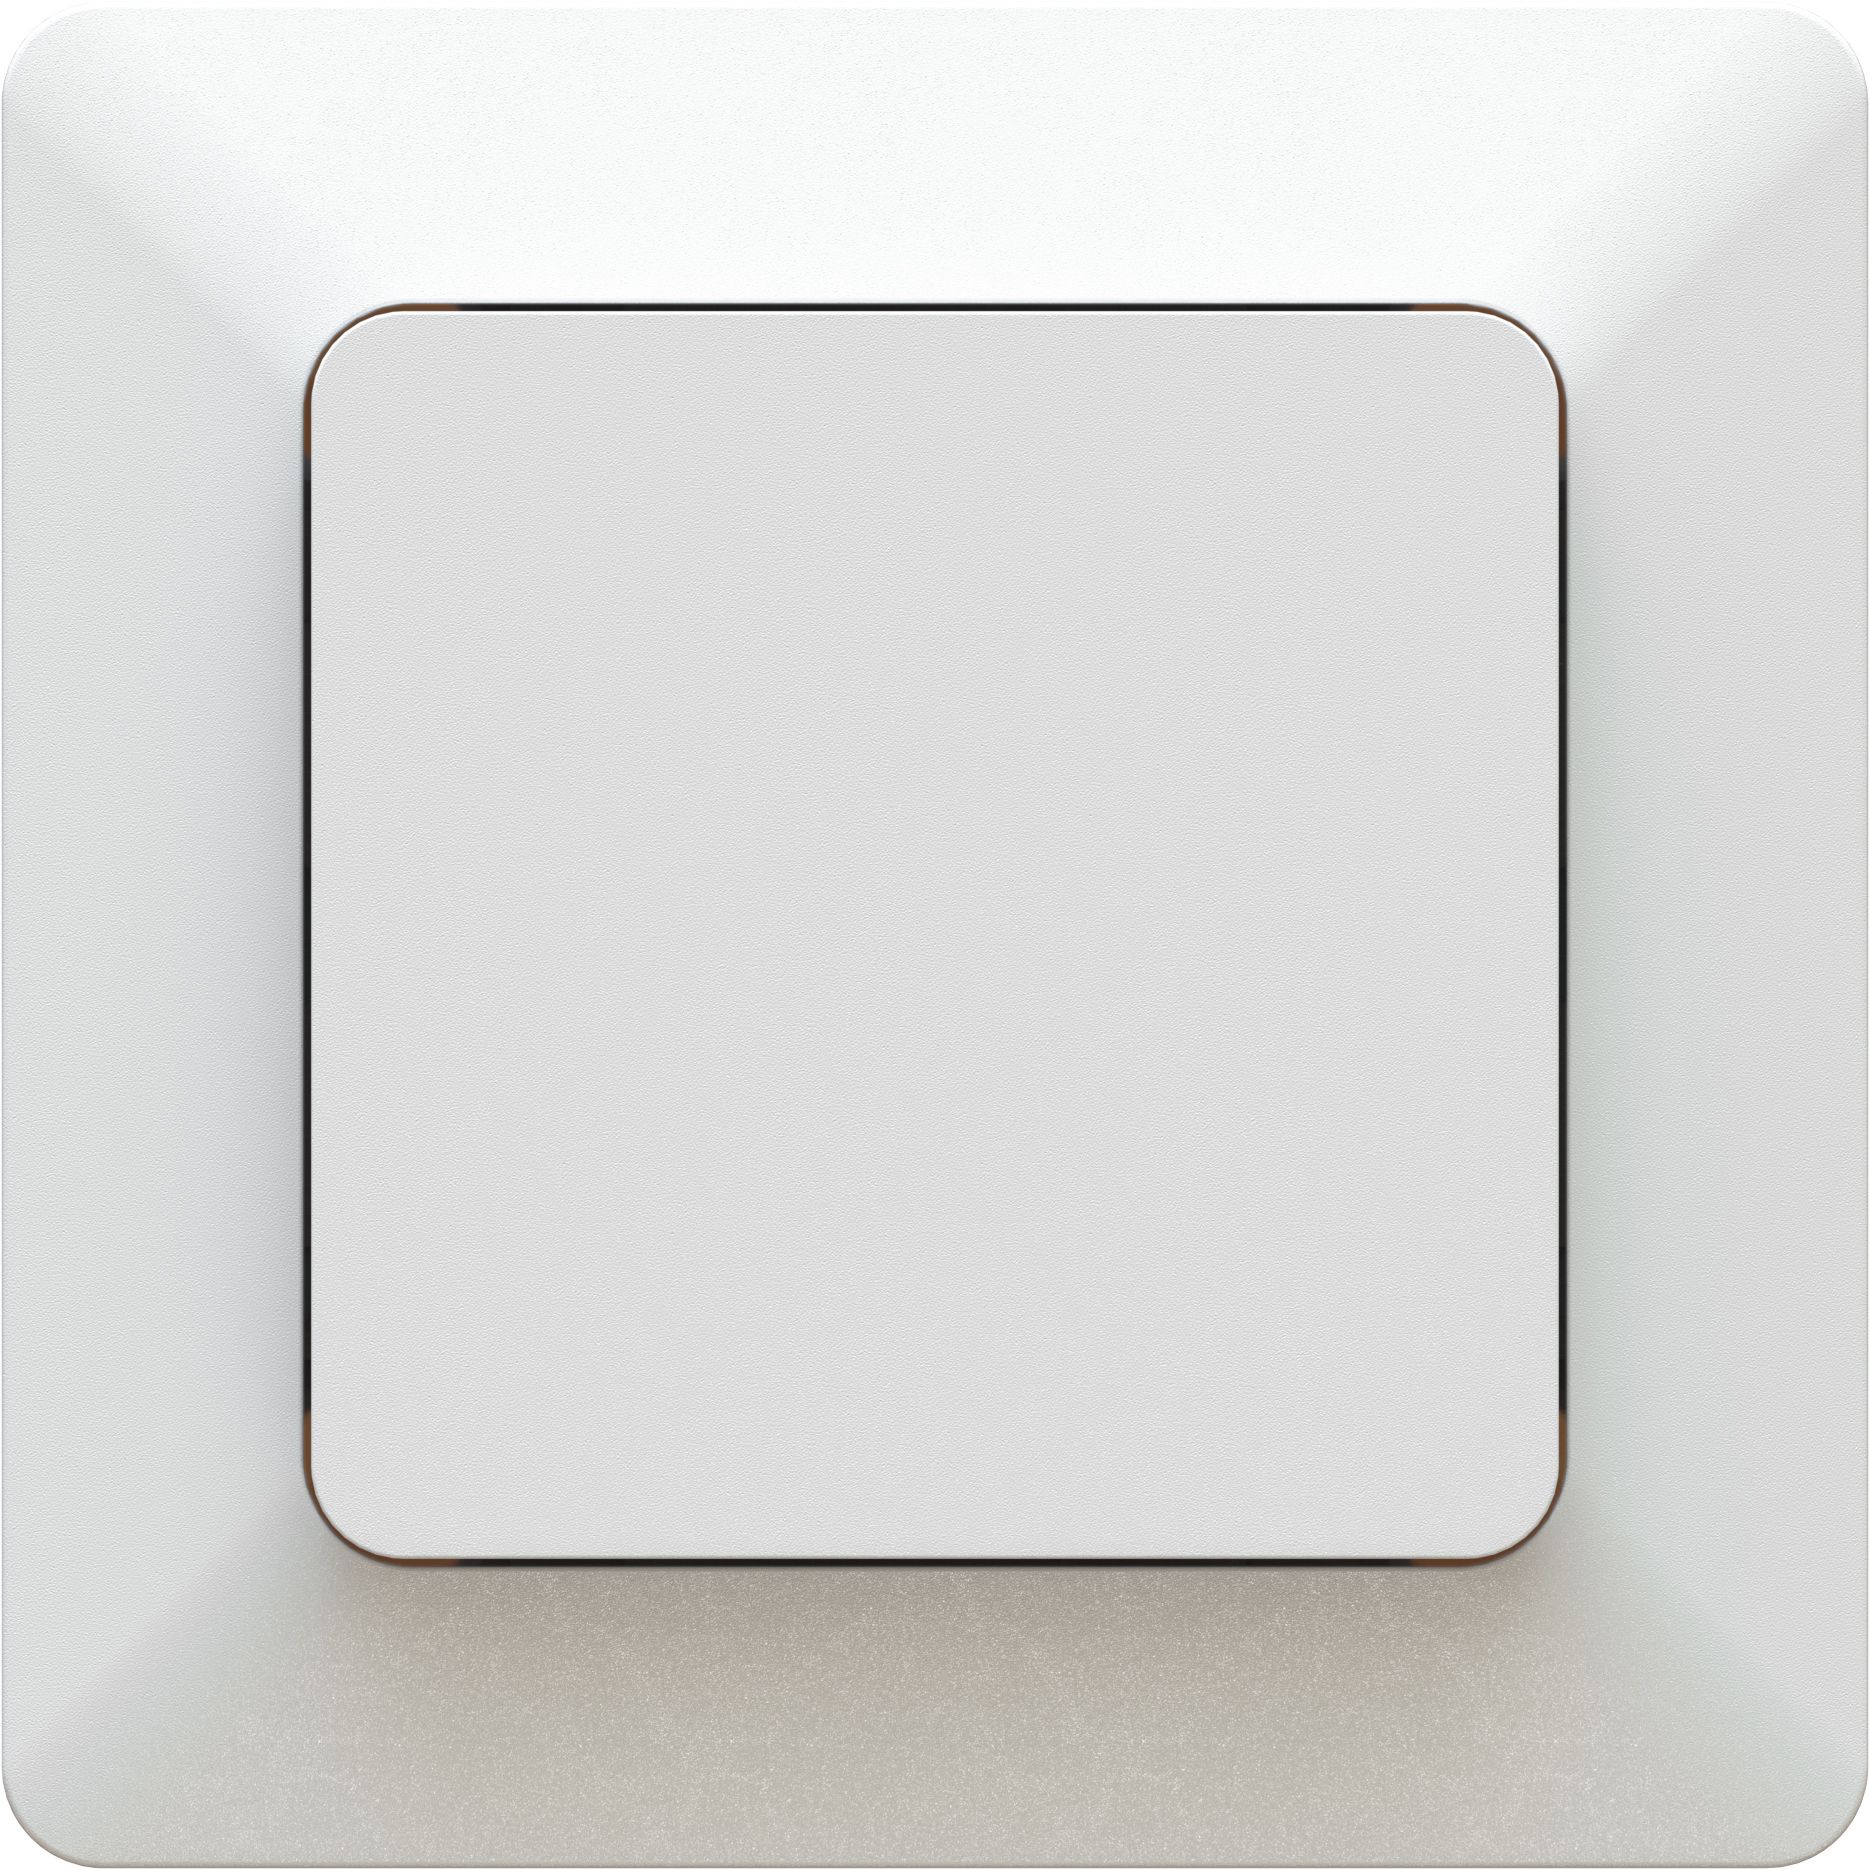 Flush-type wall impuls switch schema 3 white